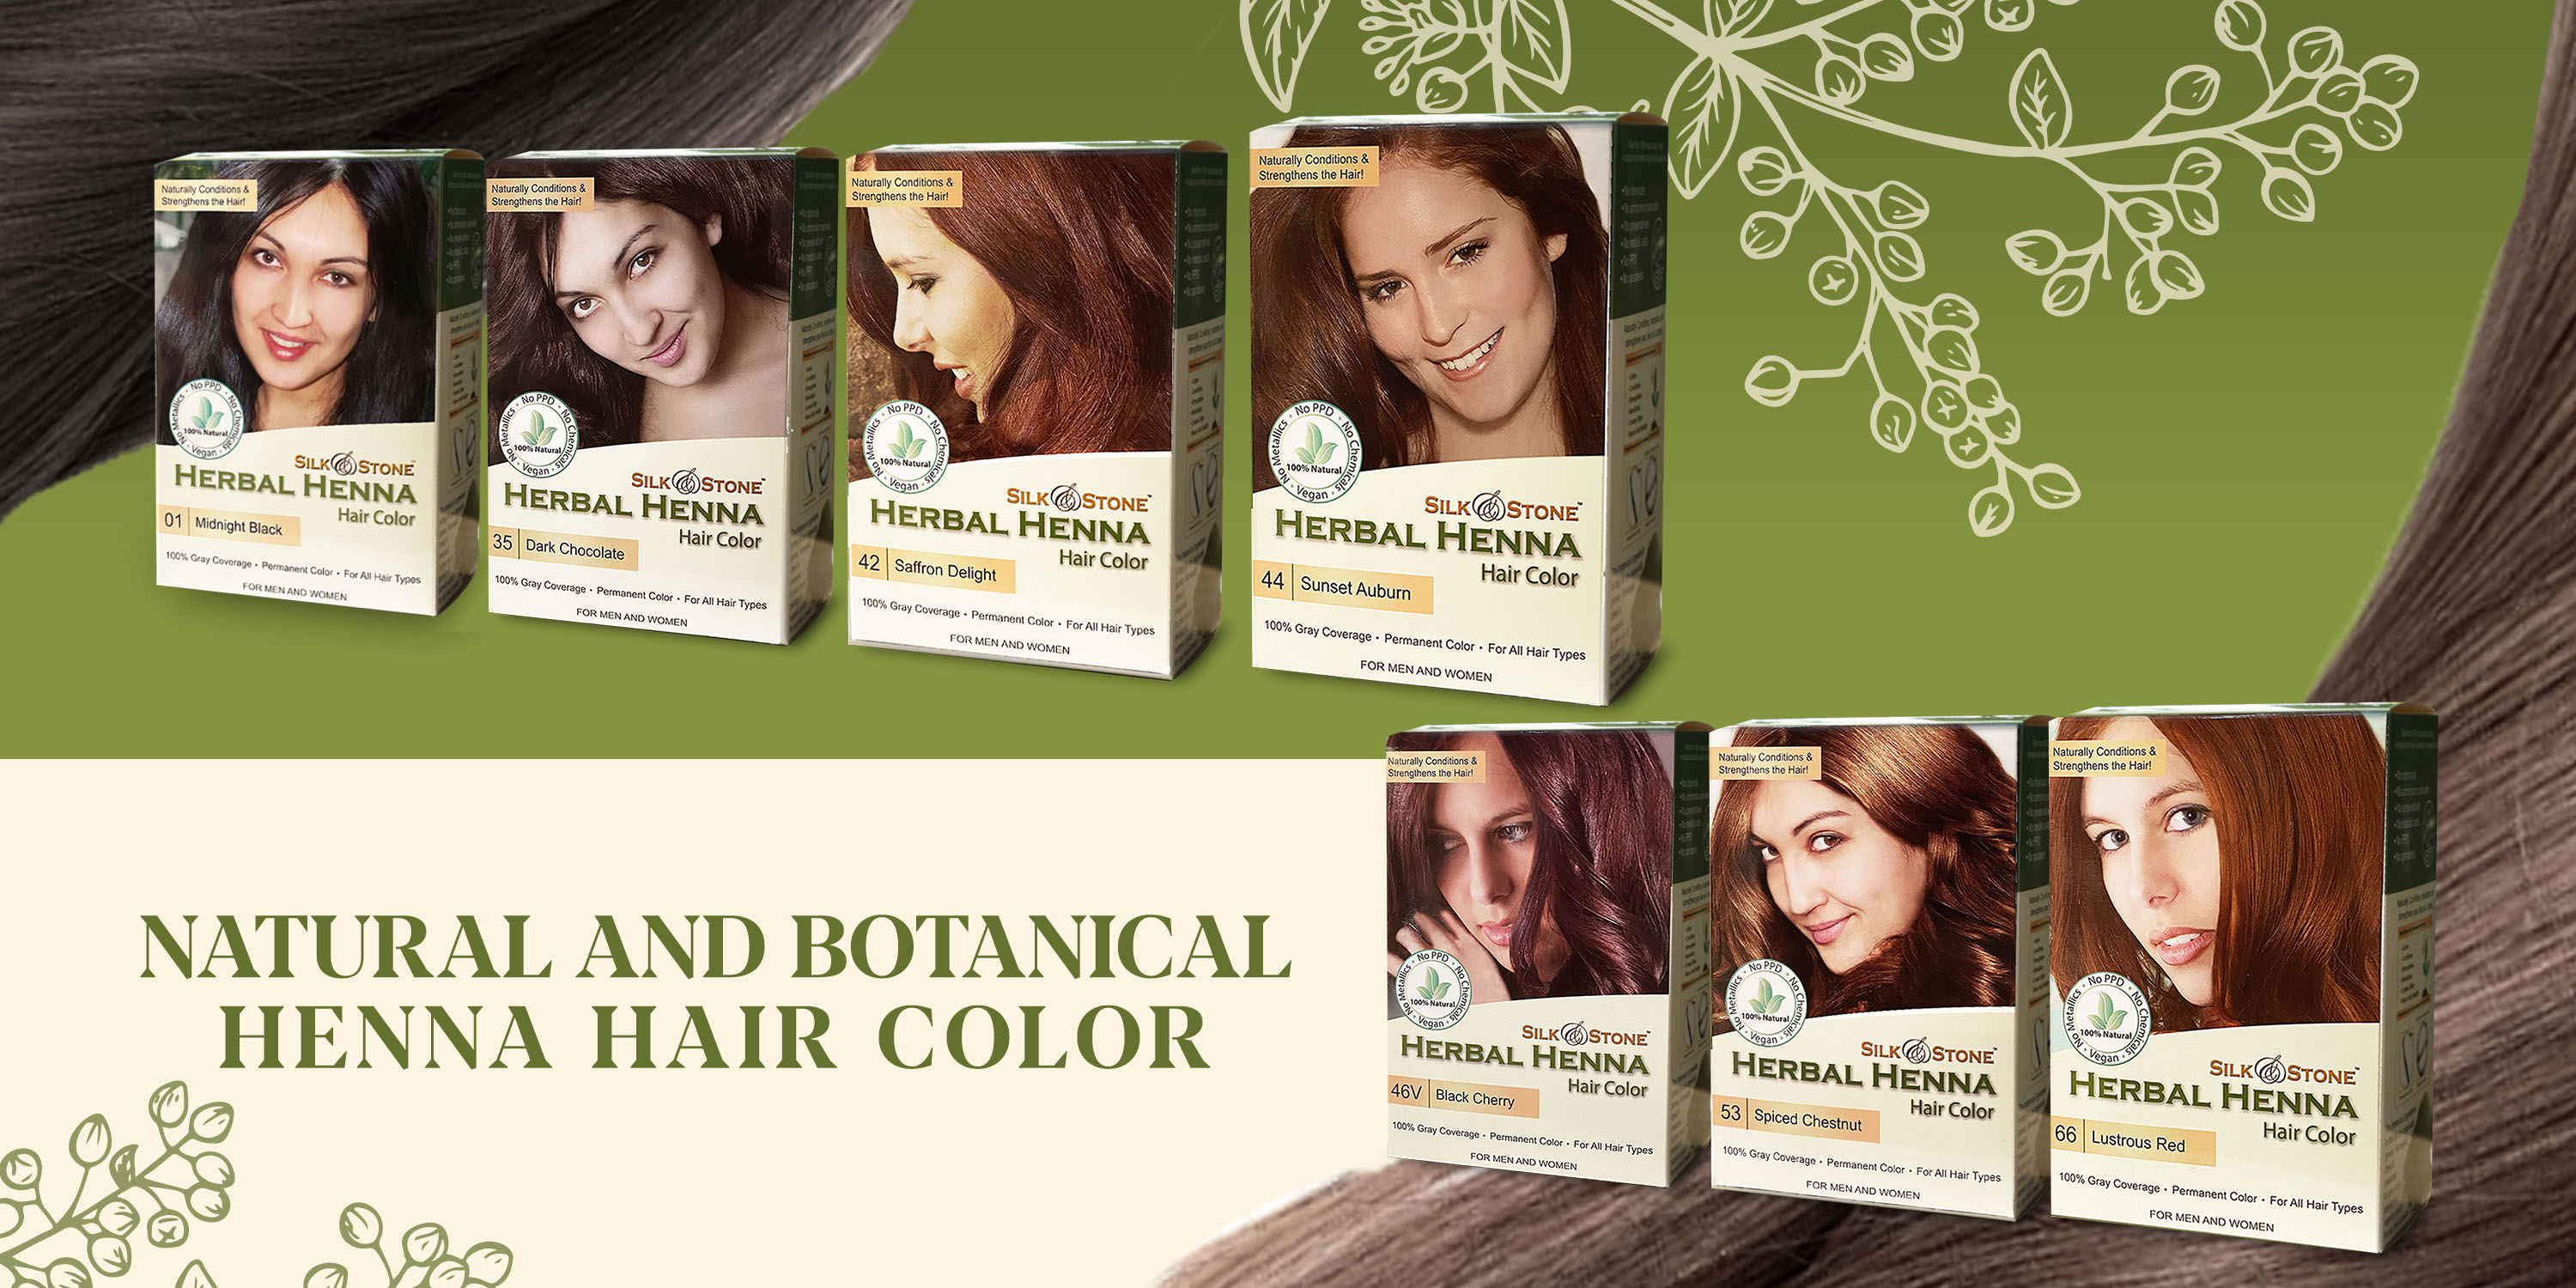 ss-herbal-henna-hair-color.jpg